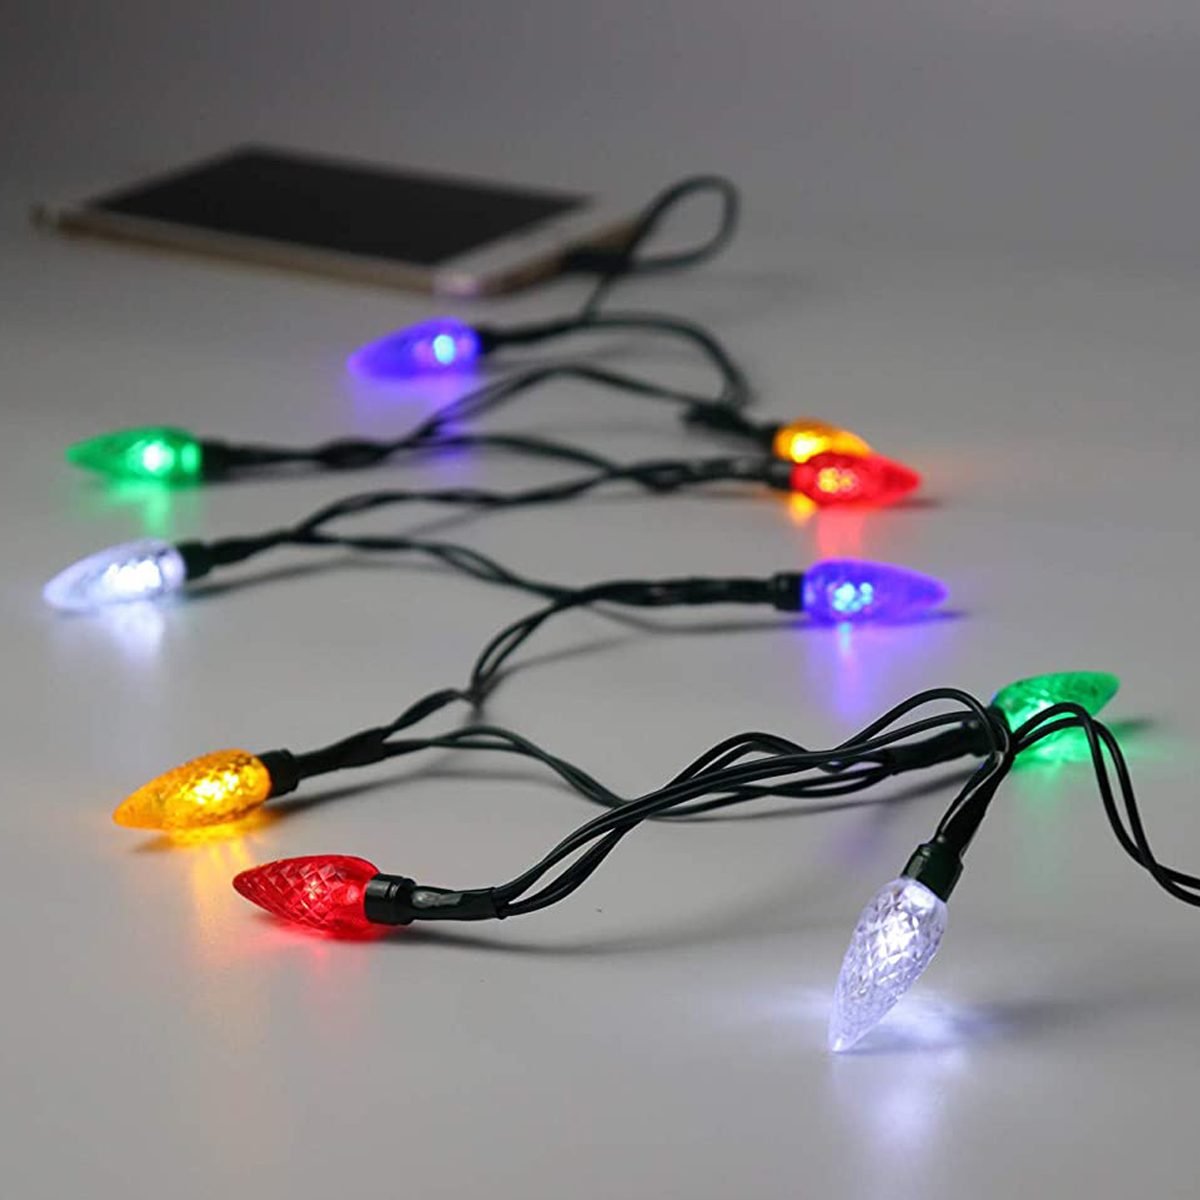 Sq Cewuidy Led Christmas Lights Зарядный кабель Ecomm Amazon.com